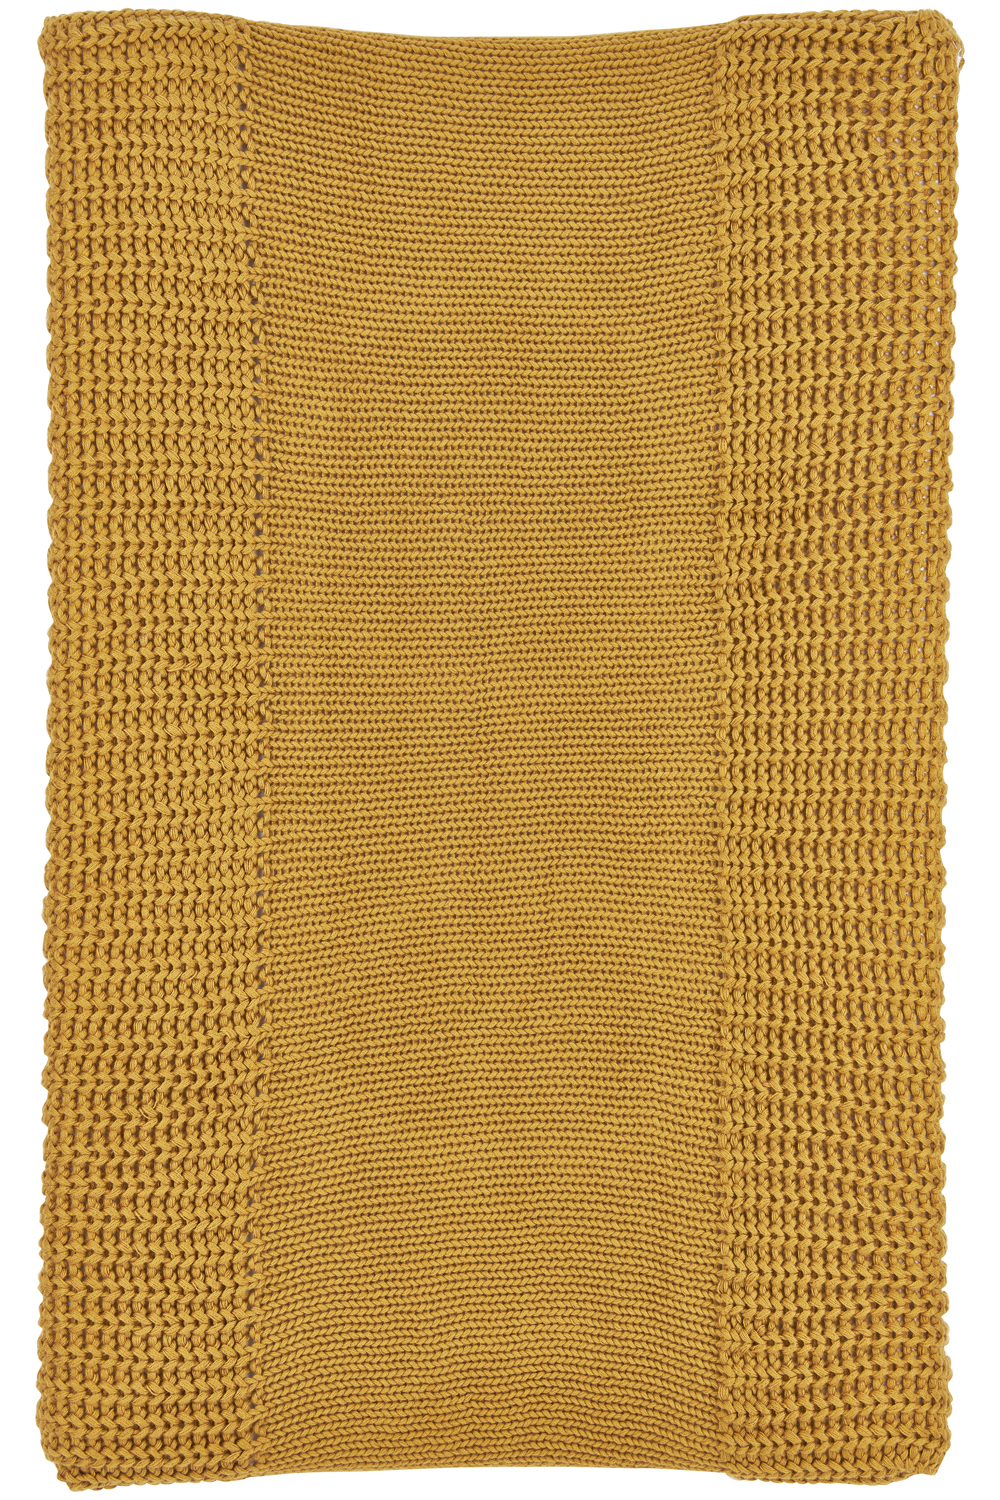 Aankleedkussenhoes Herringbone - honey gold - 50x70cm